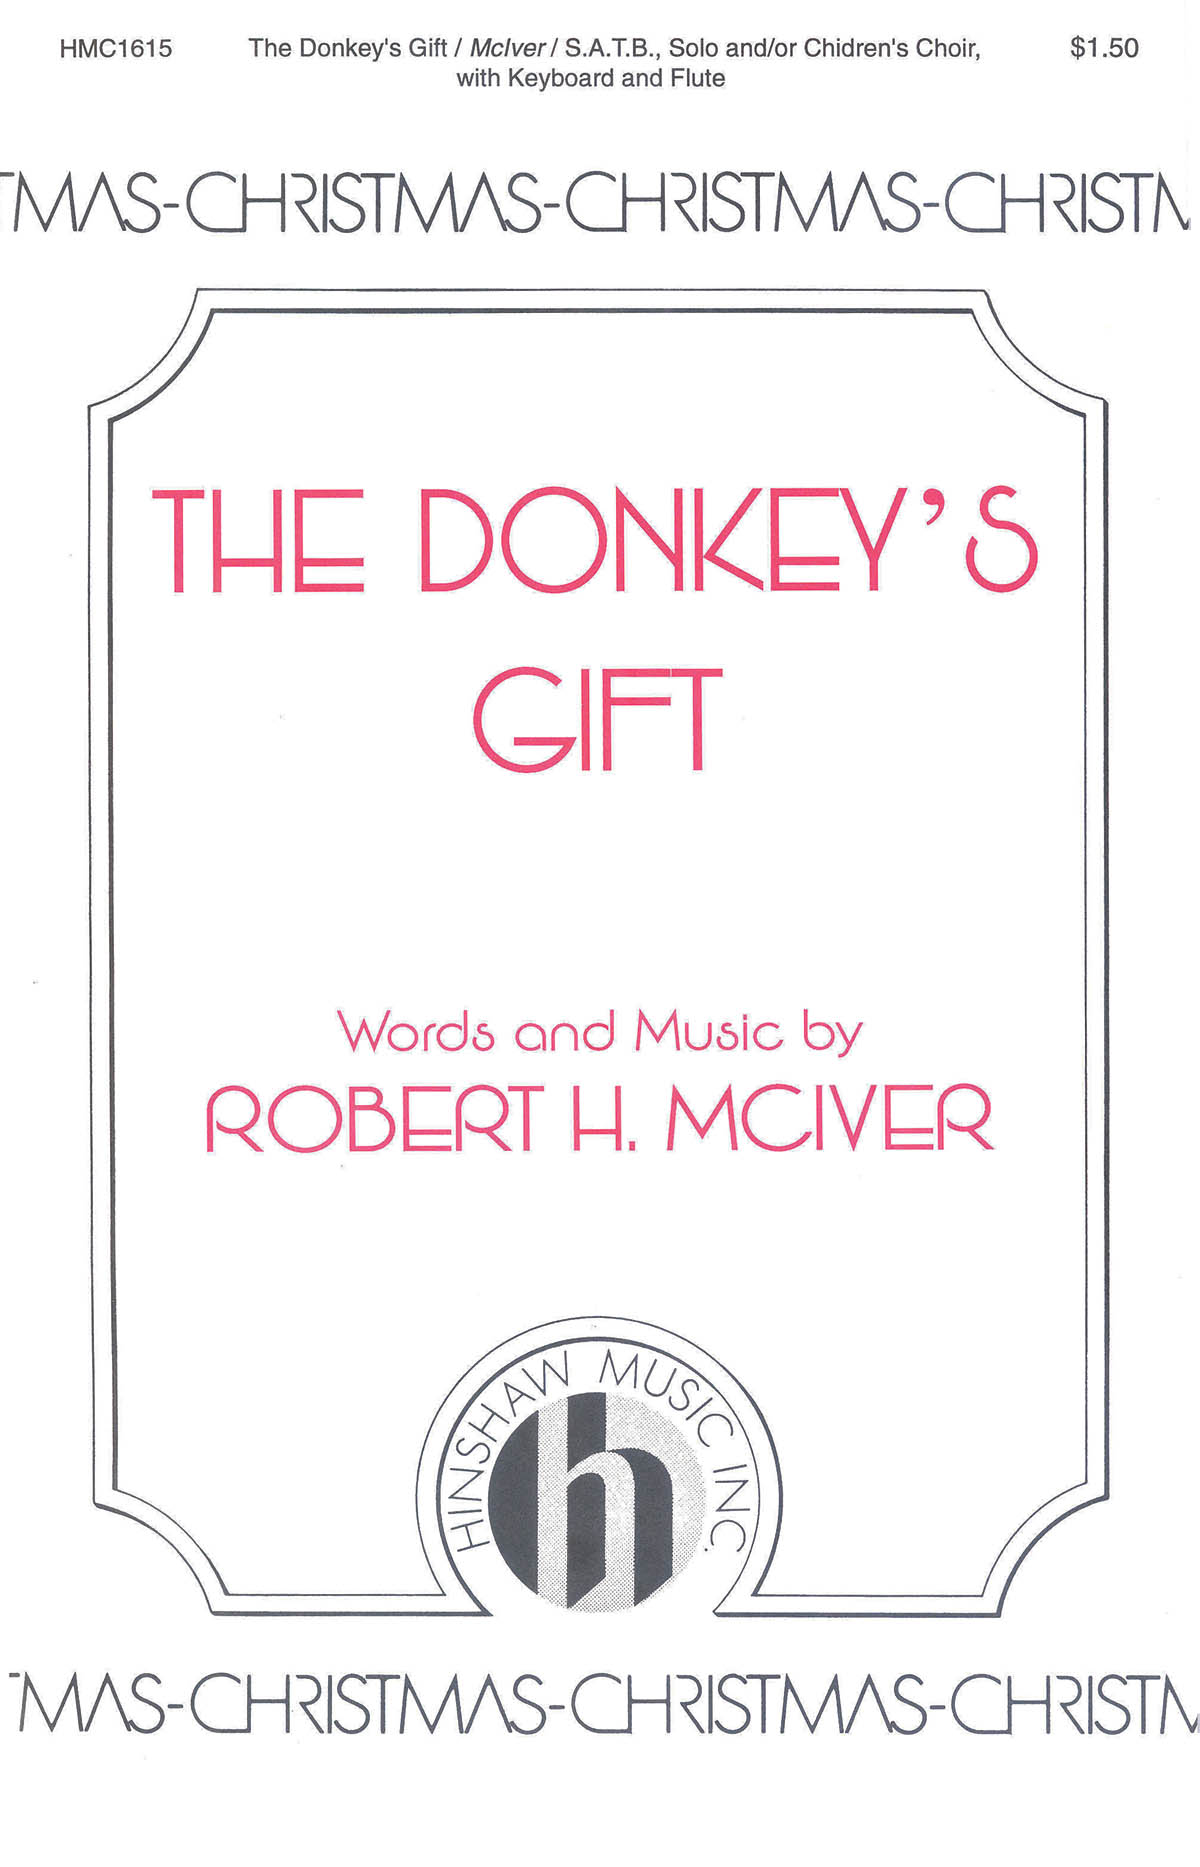 The Donkey's Gift